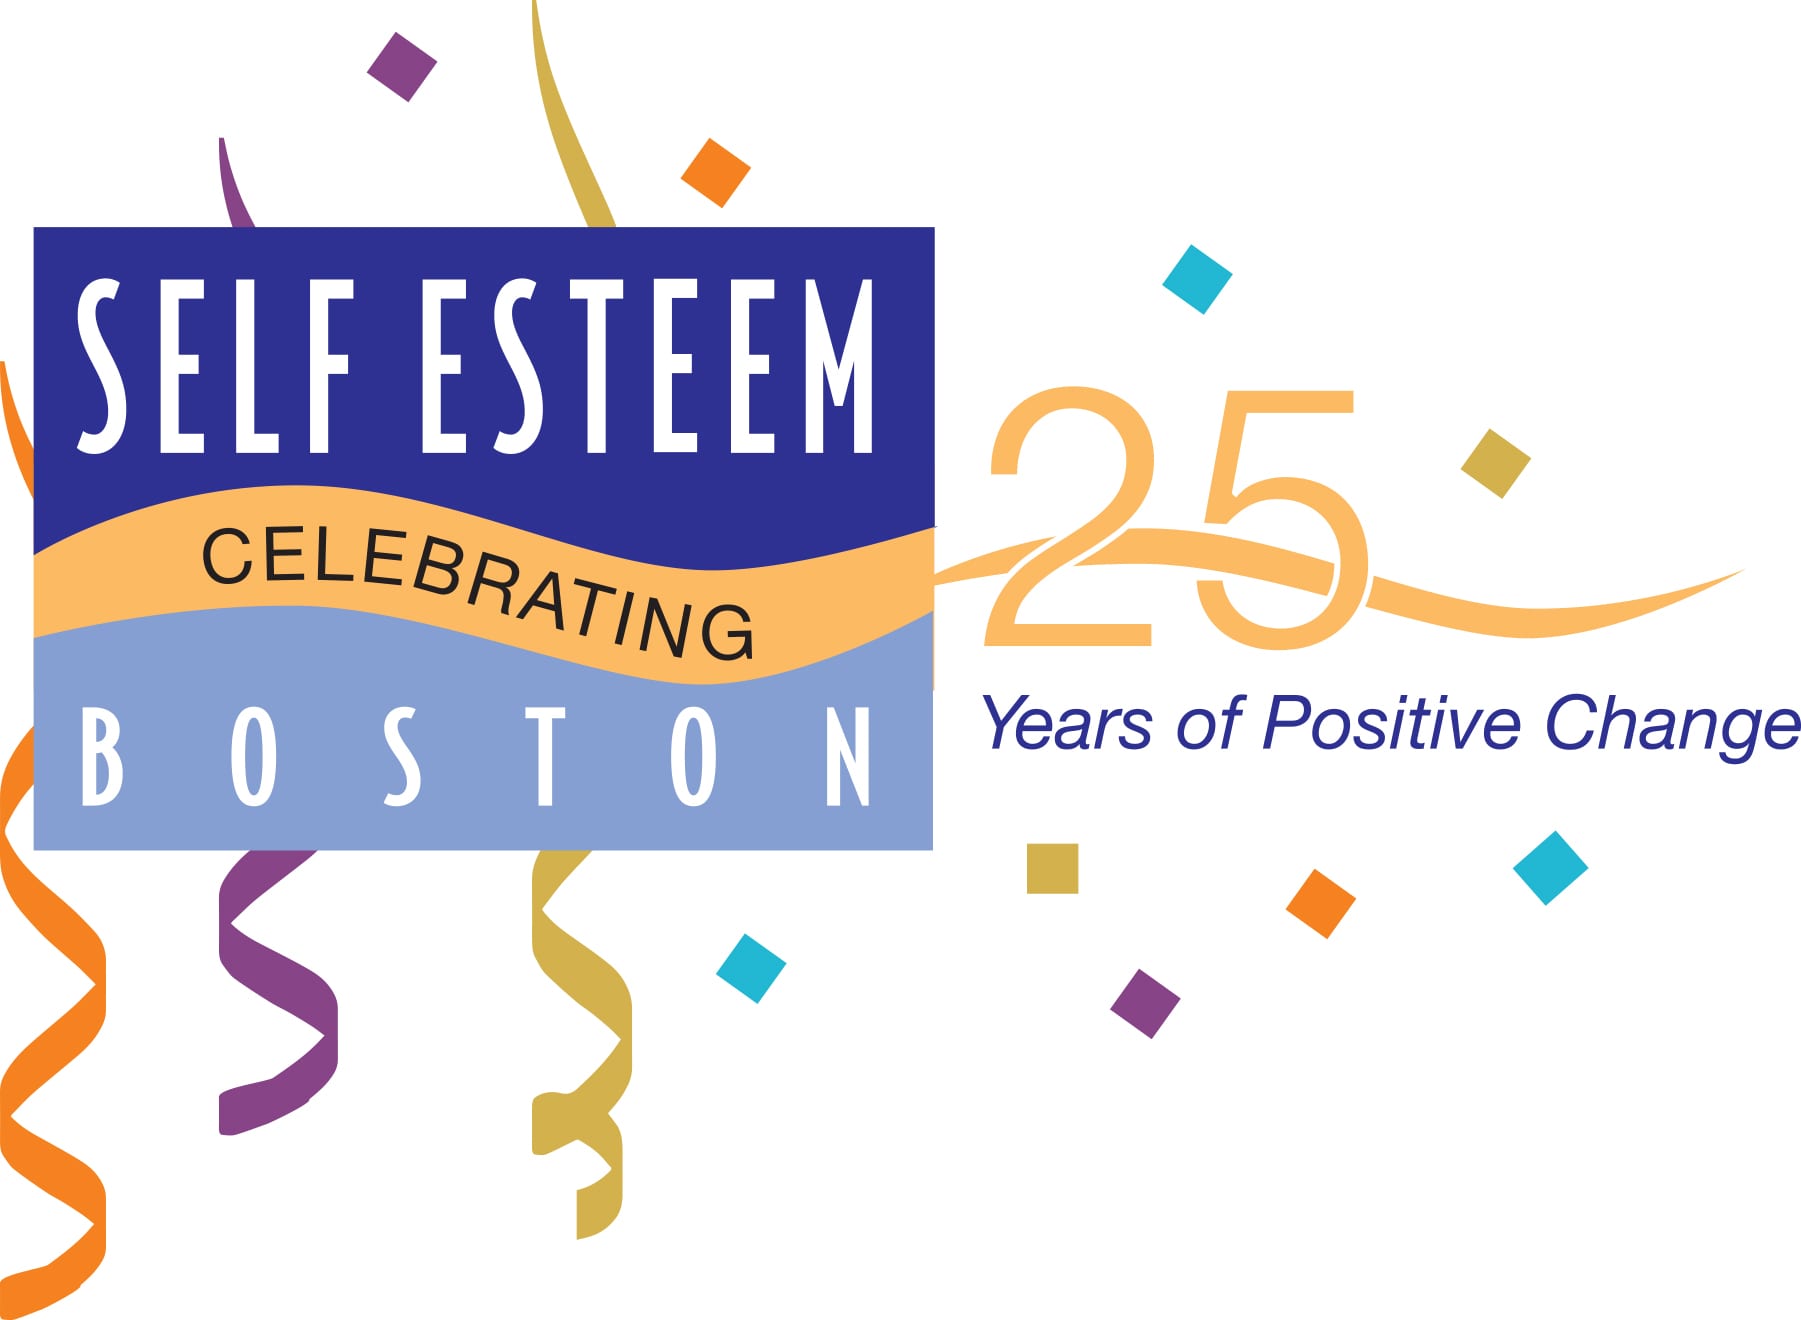 Self Esteem Boston Celebrating 25 Years of Positive Change!